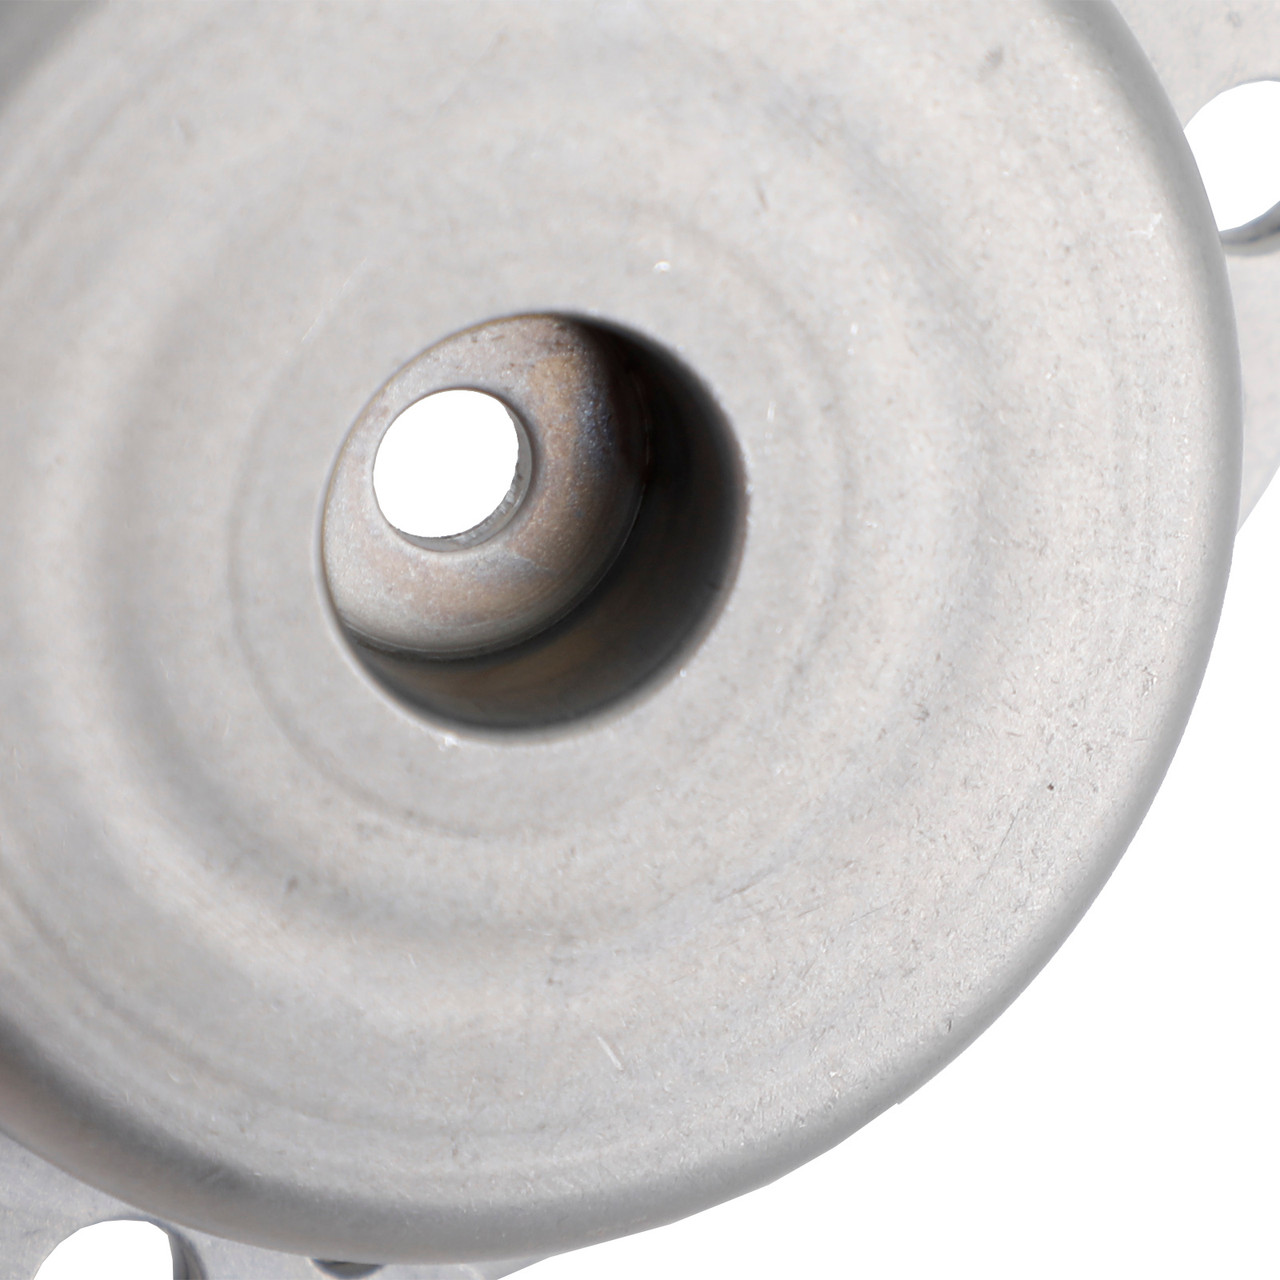 Camshaft Adjuster Magnet w/ Cover & Seal for Mercedes W203 C230 03-05 2710510177